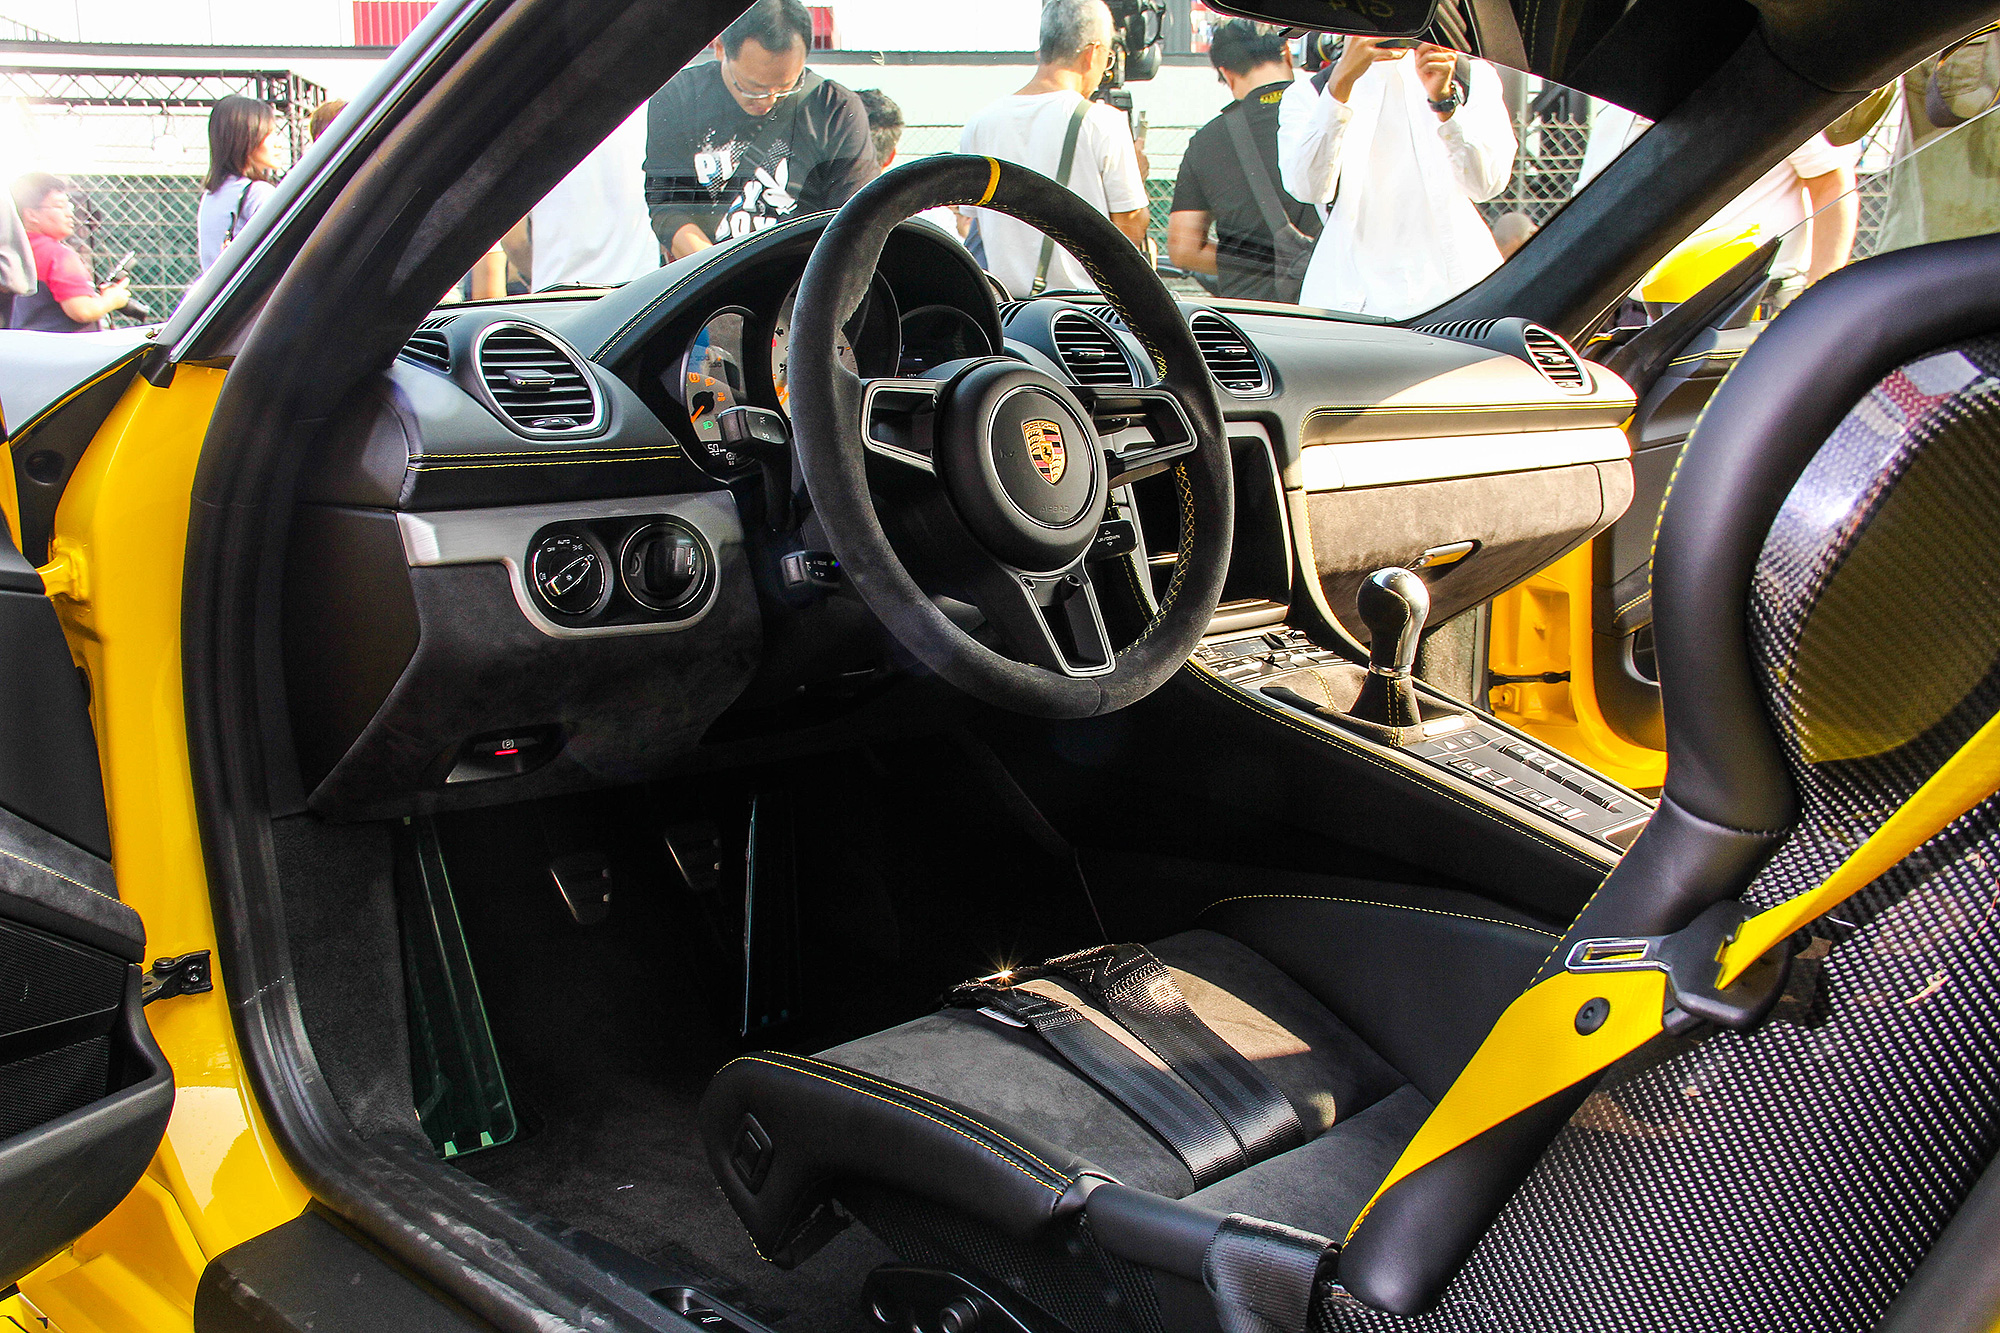 718 Cayman GT4 的座艙風格較偏賽車化。